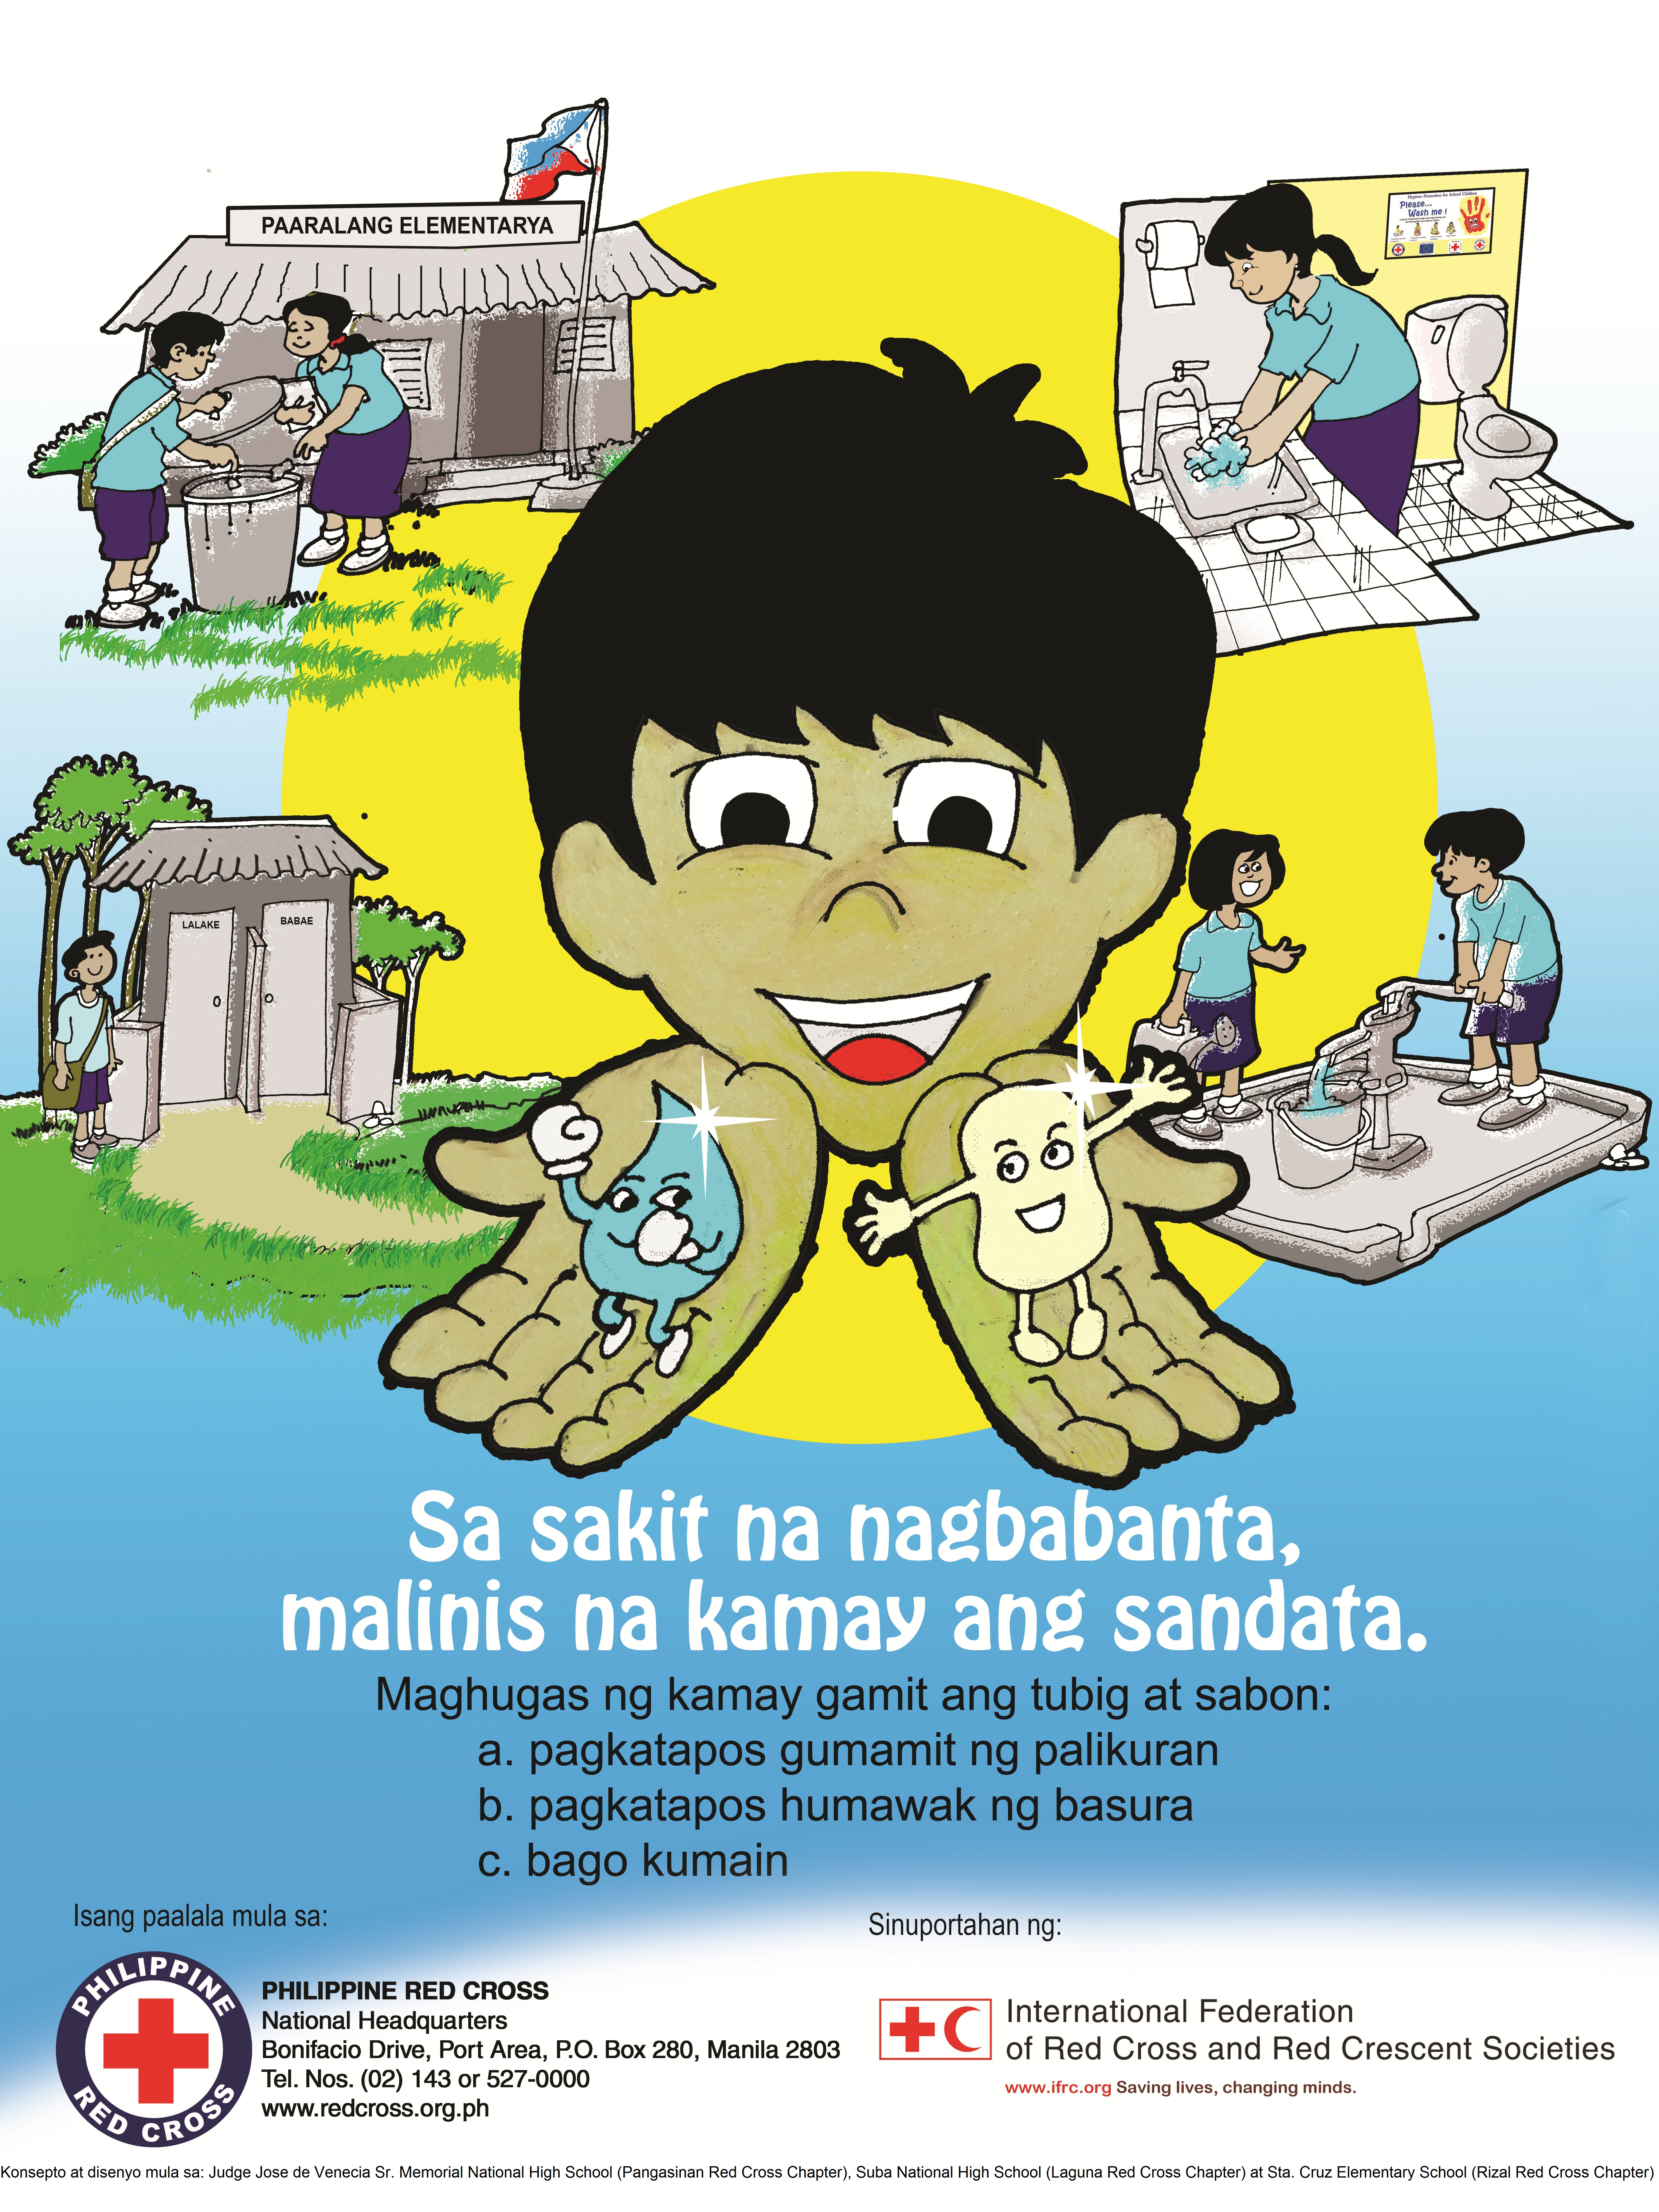 WASH School-Based Poster [Filipino]